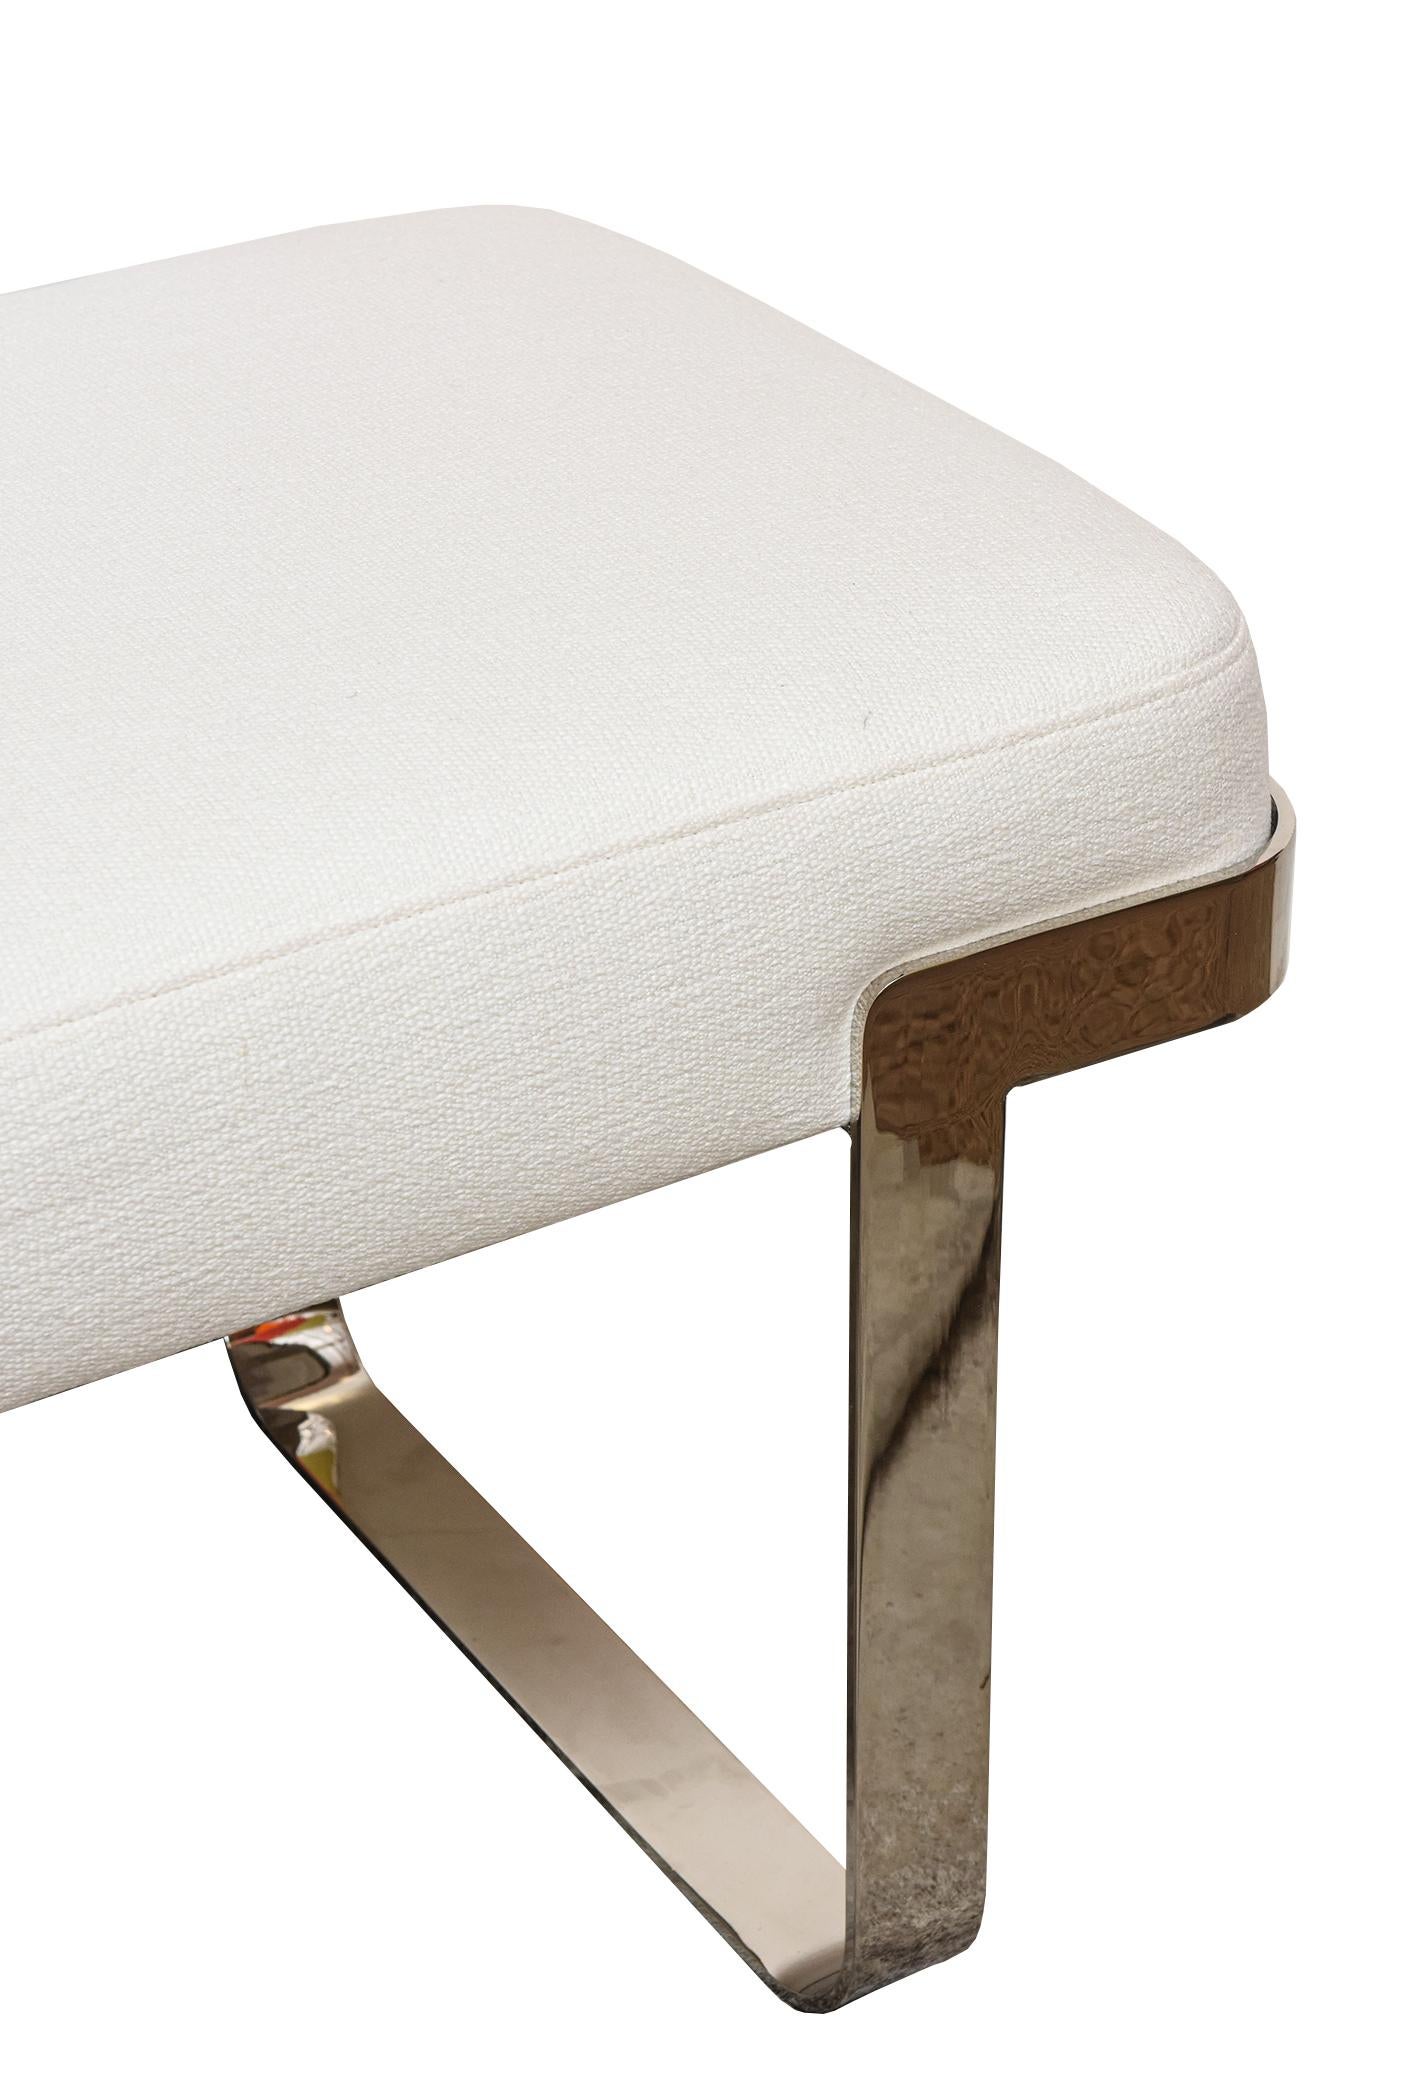 Modern Tri Mark Designs Nickel Plated and Upholstered Bench Vintage